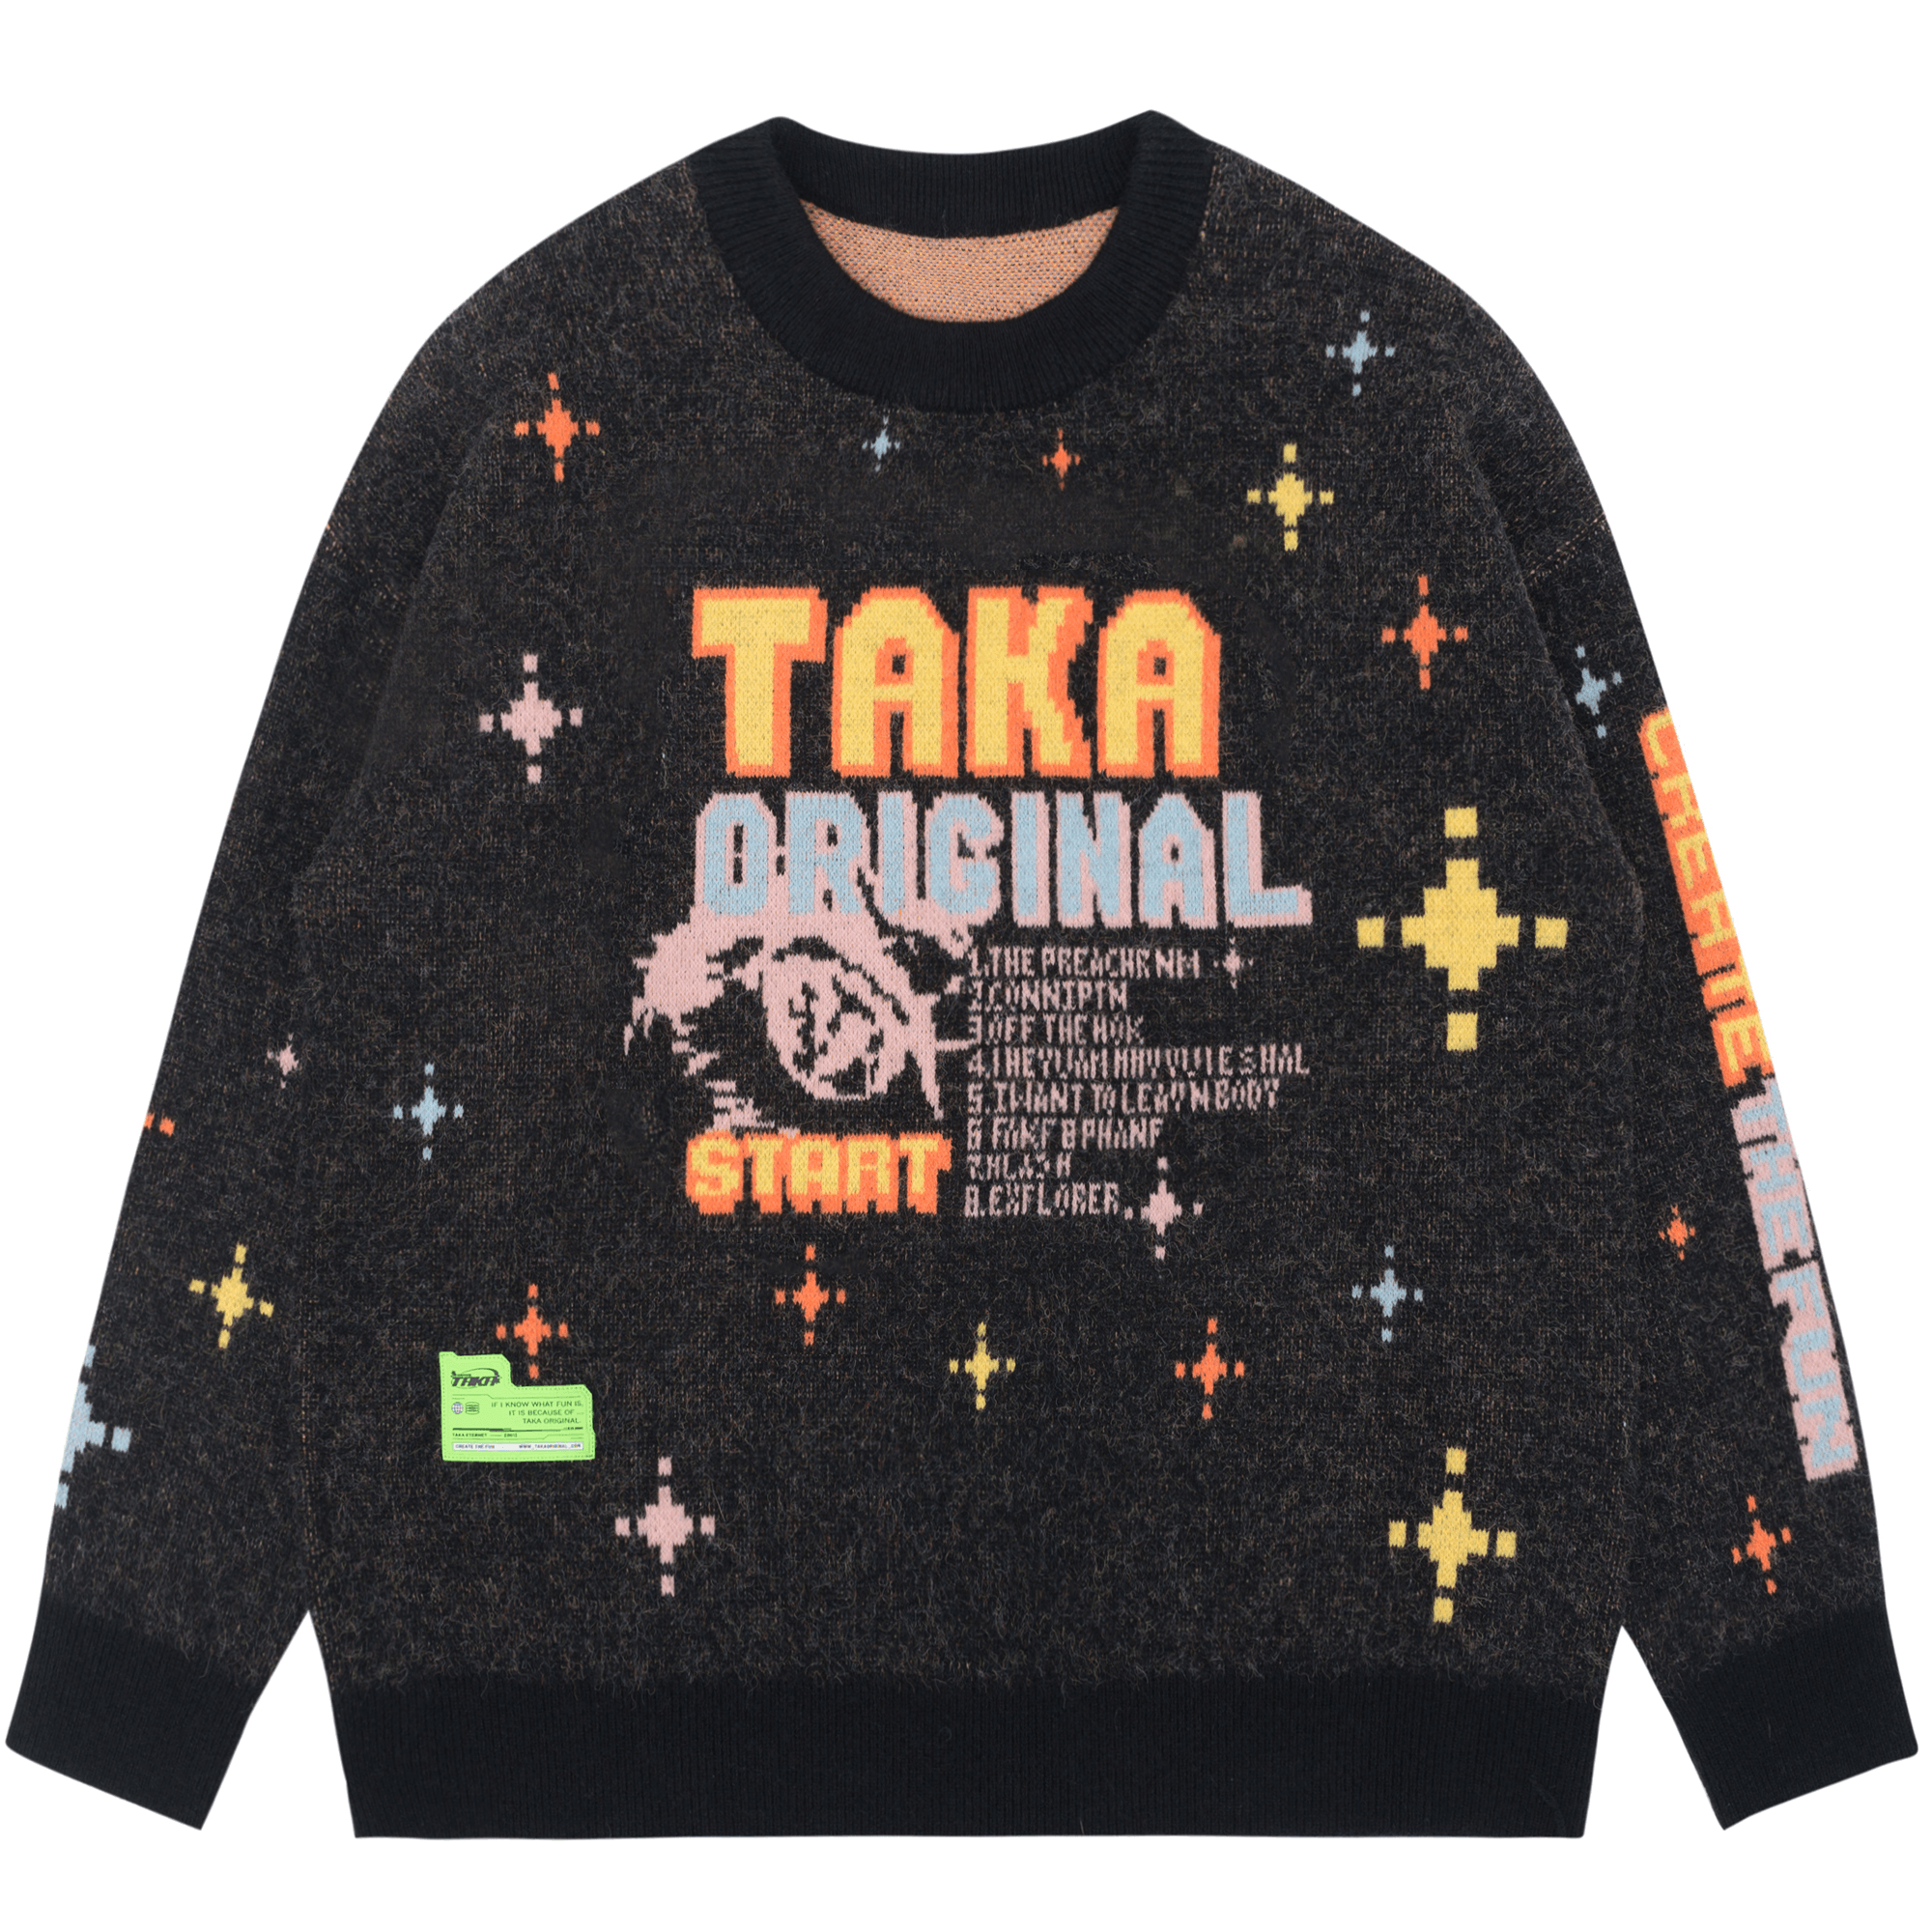 TAKA ORIGINAL LIMITED - TAKA Original [ Eternet 002] the life of star knit jumper